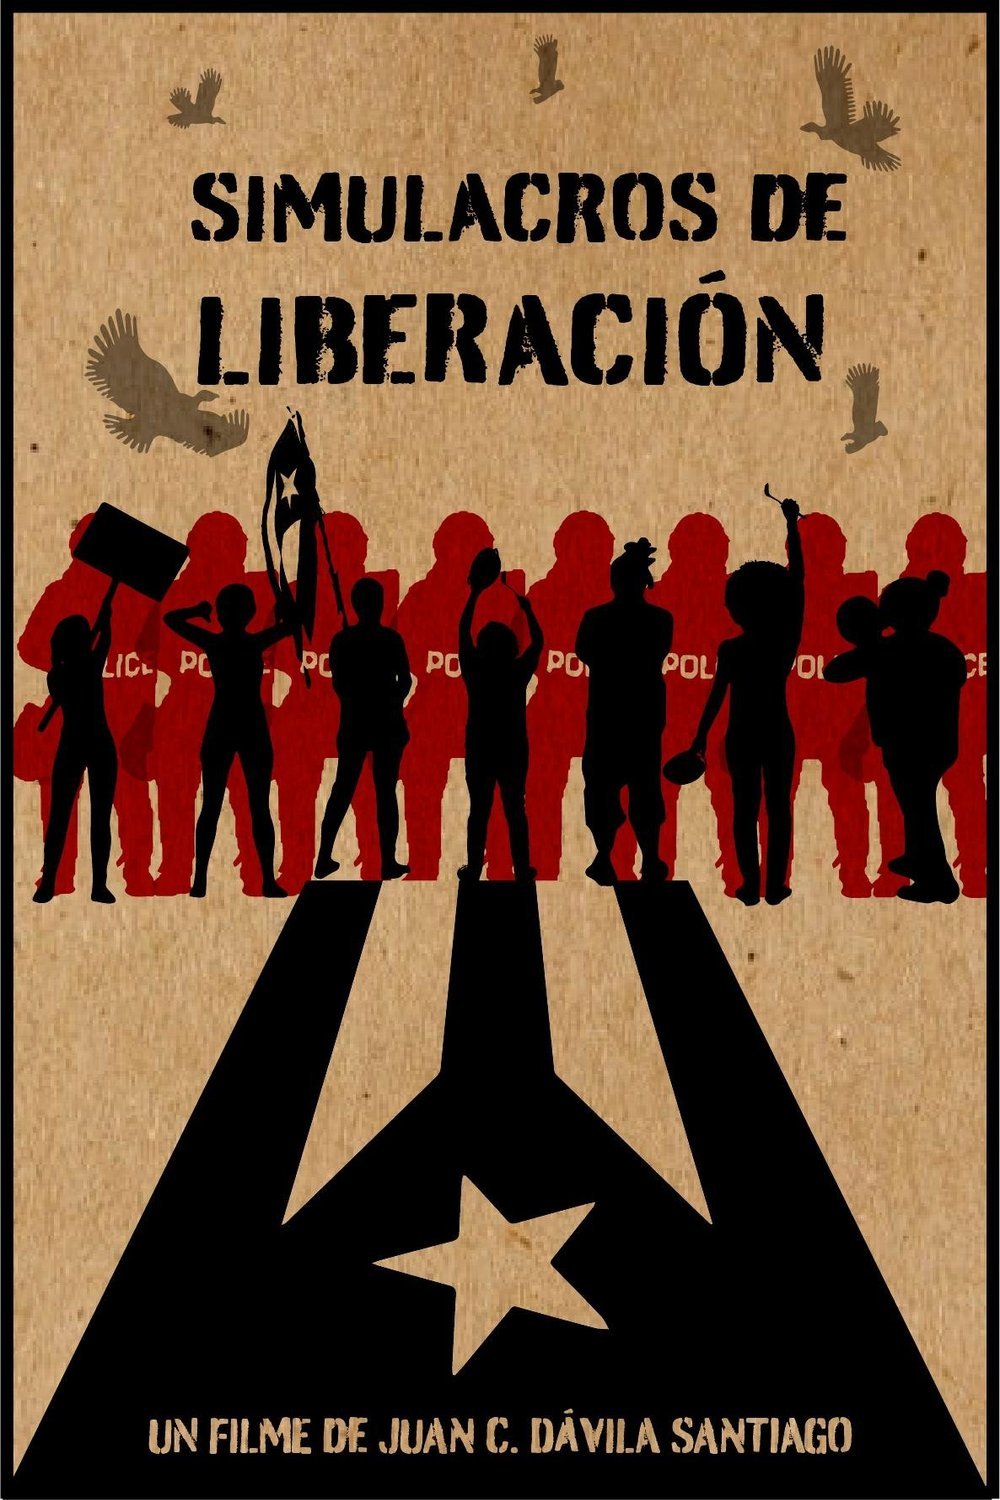 Spanish poster of the movie Simulacros de liberación